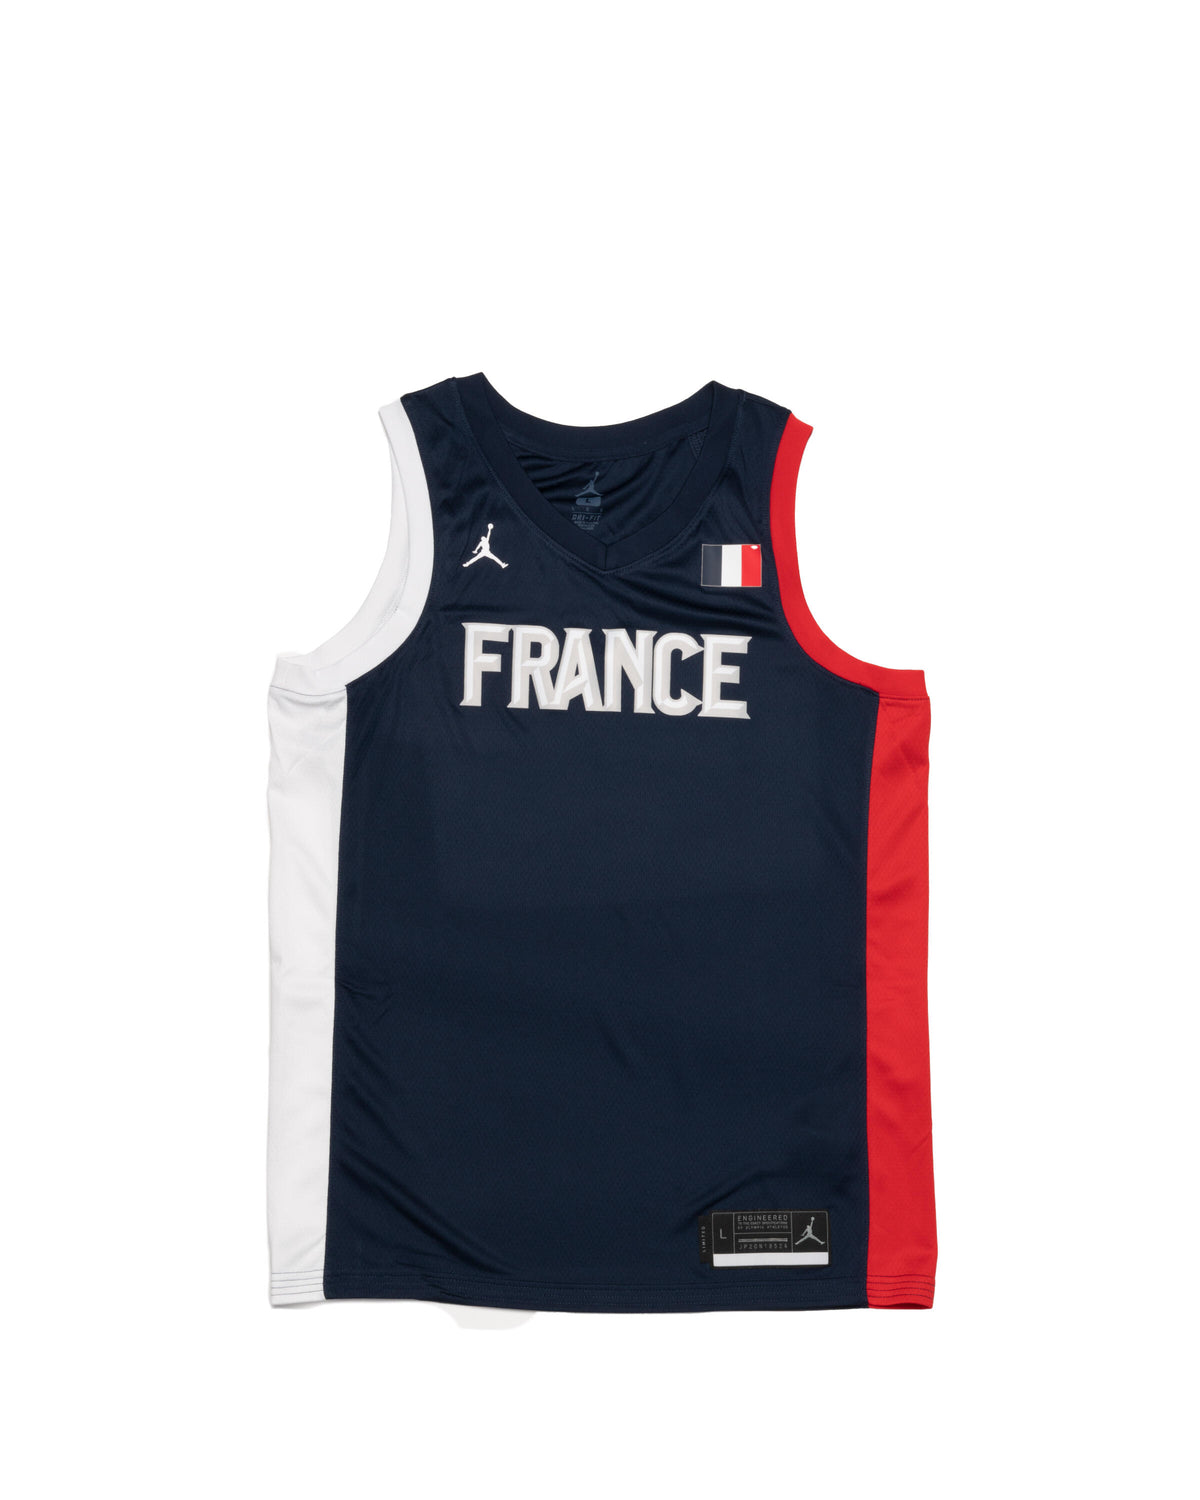 Air Jordan France Basketball Jersey